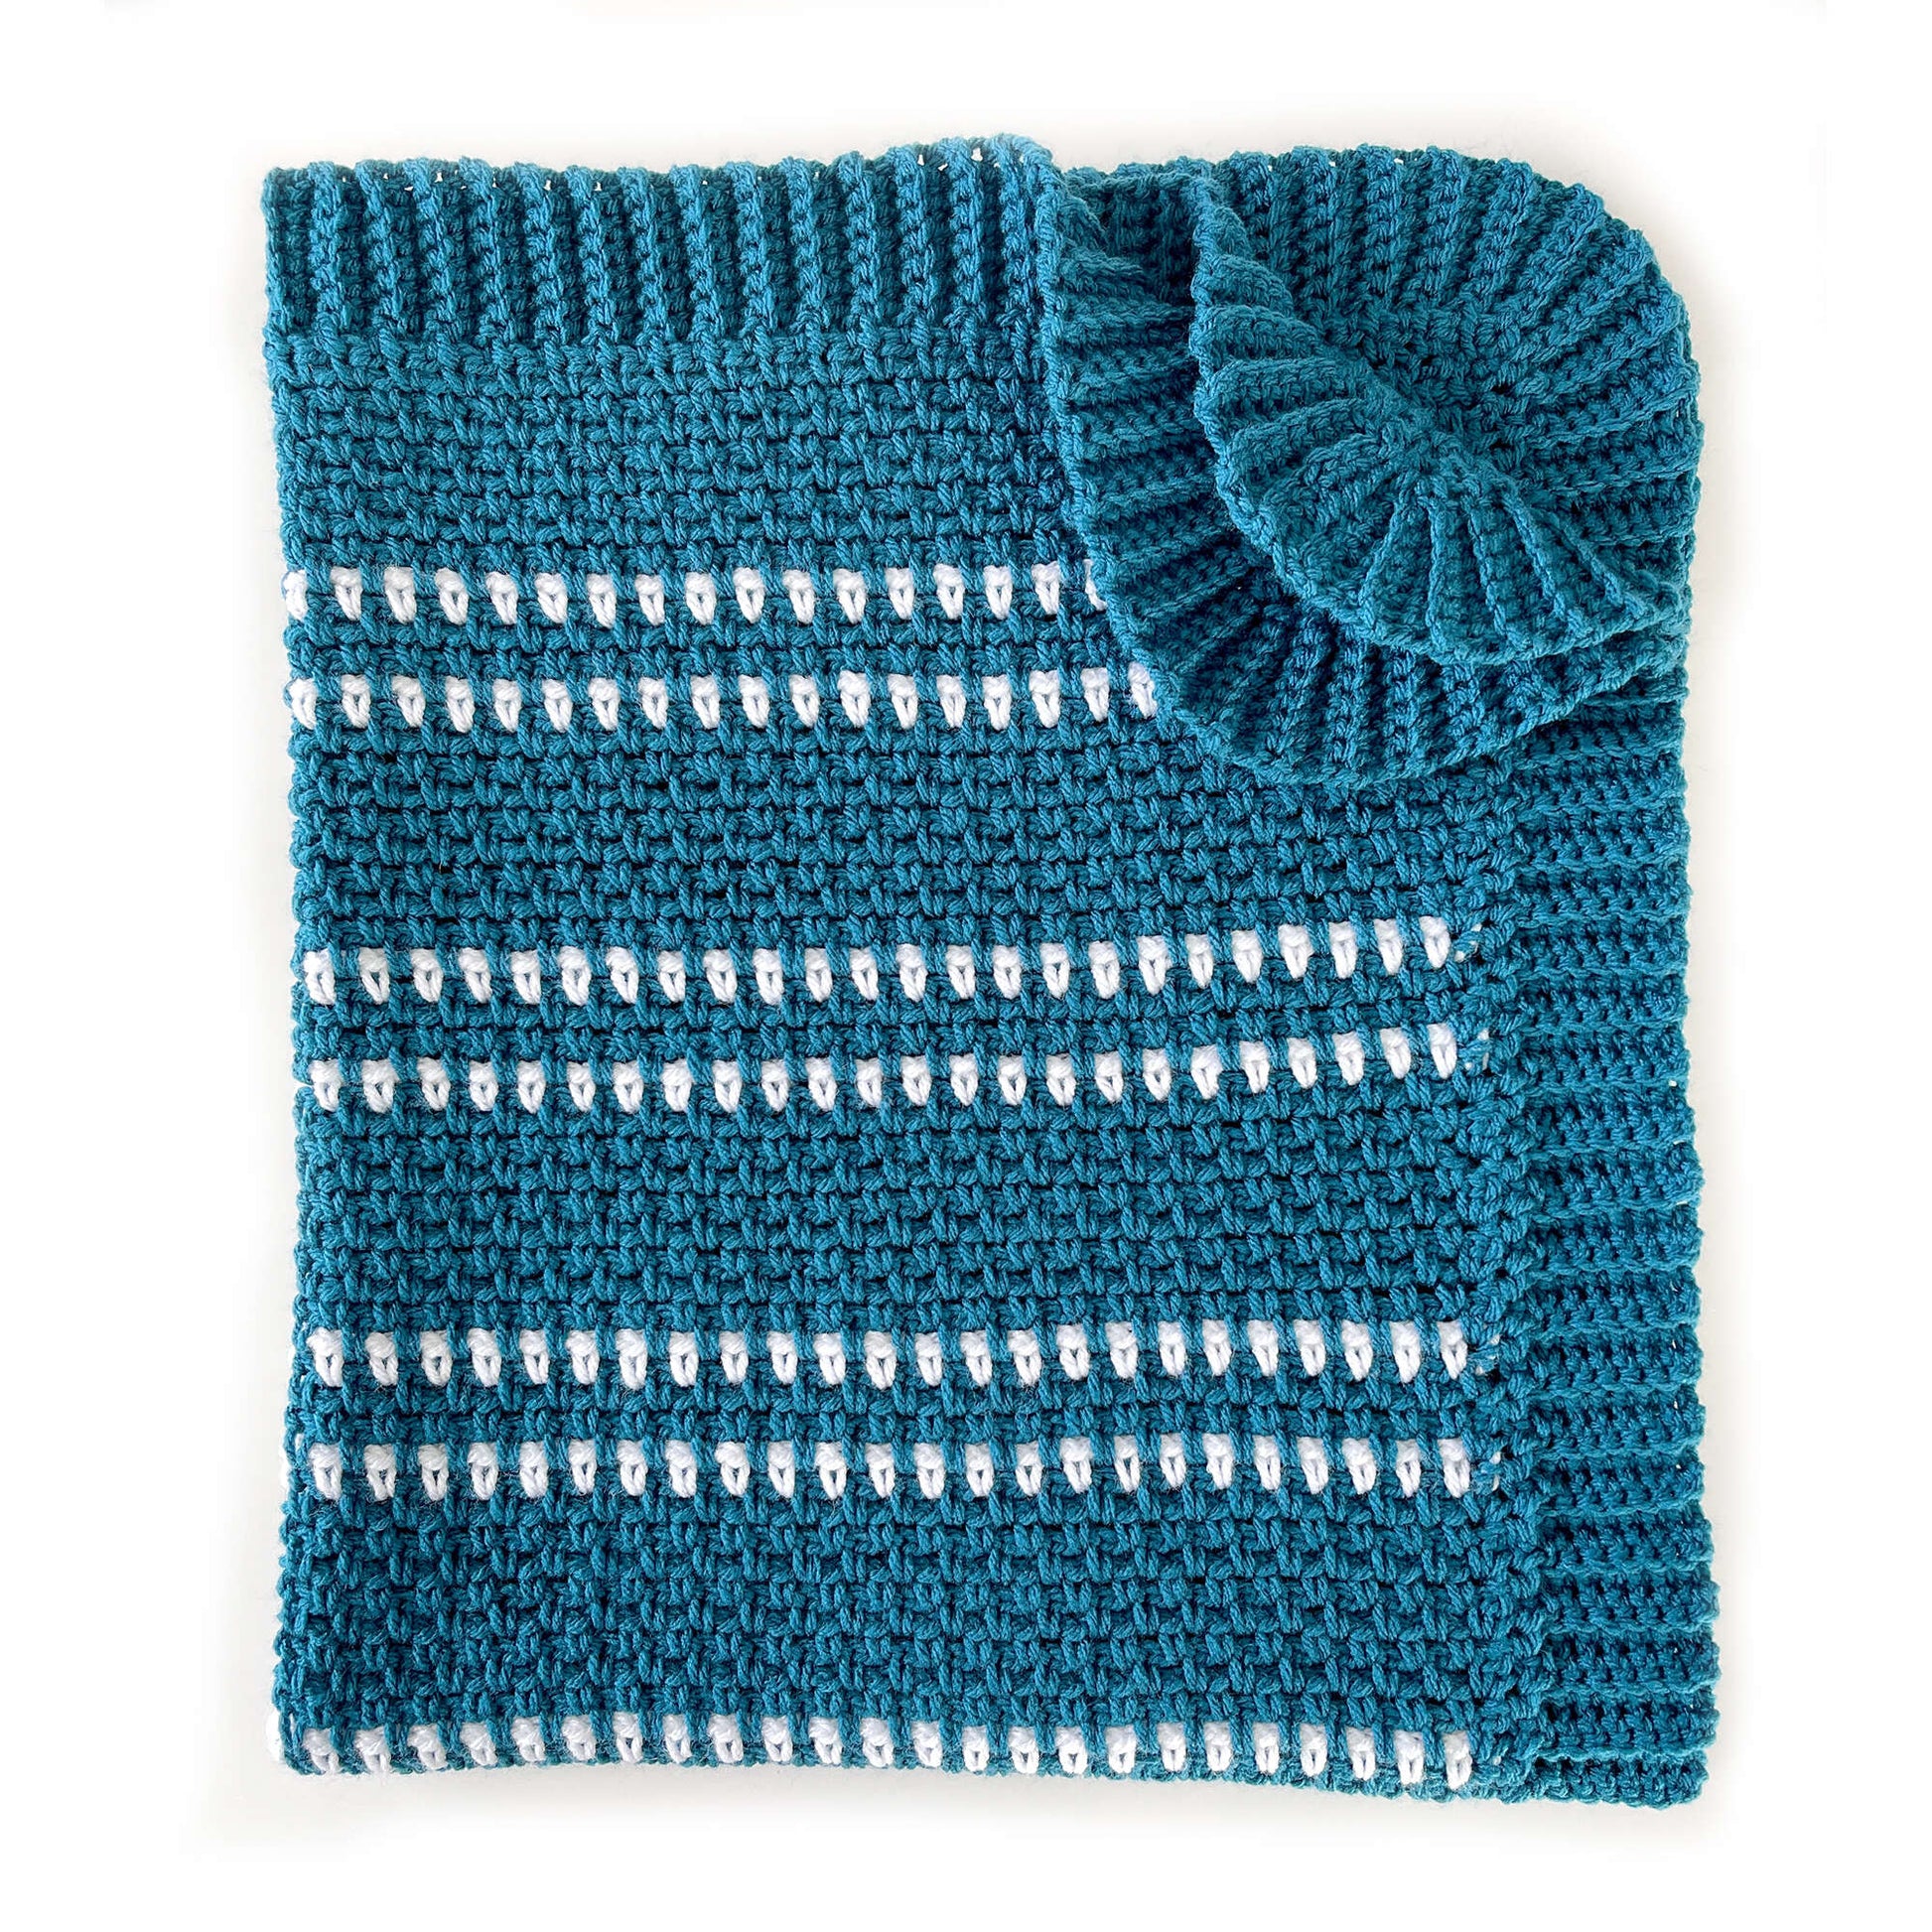 Only the Best for Baby: 3 Free Crochet Baby Blanket Patterns - I Like  Crochet